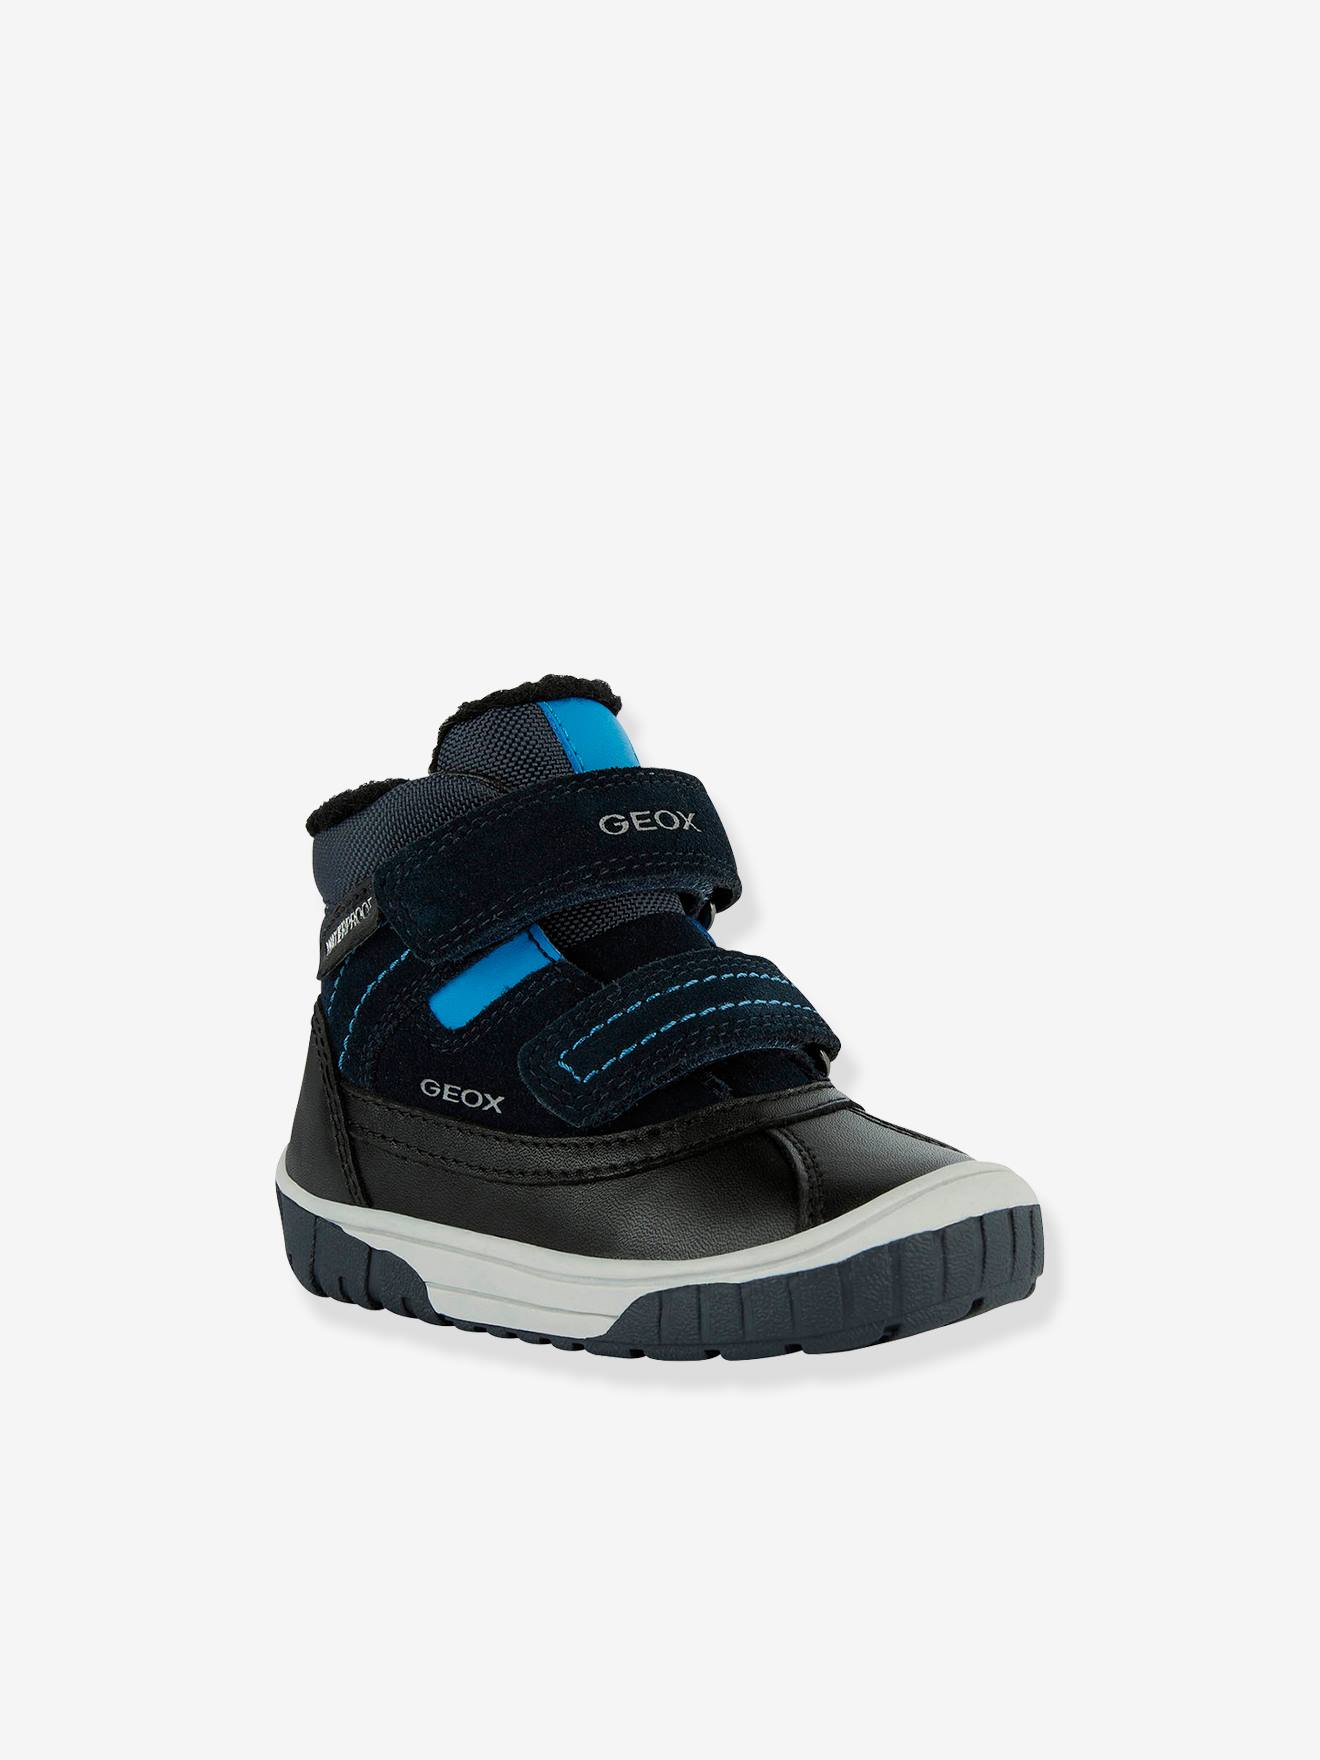 Zapatillas de caña media Omar Boy WPF GEOX®, bebé azul marino